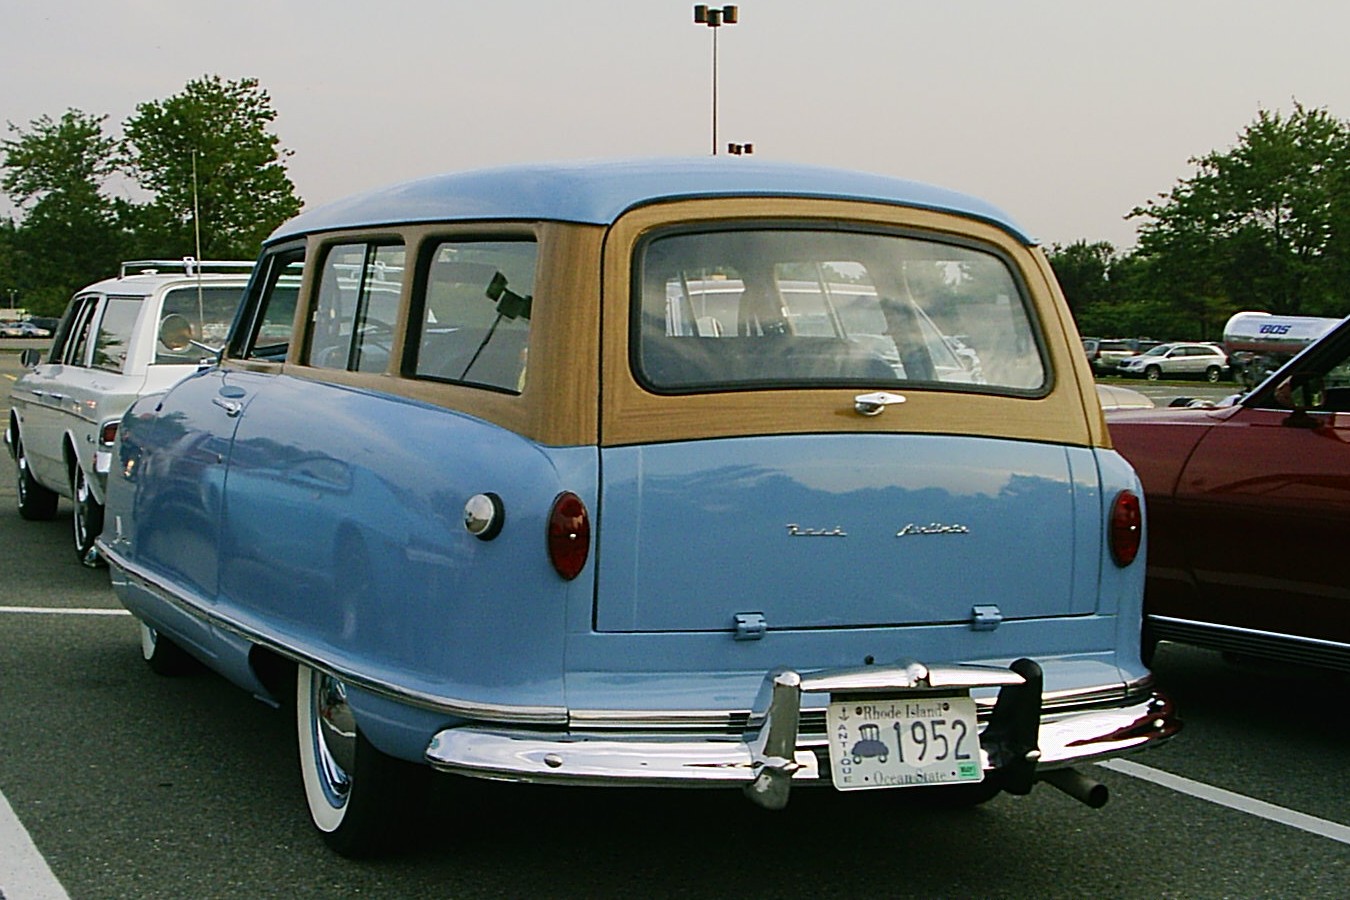 Dossier: 1952 Nash Rambler arrière de wagon bleu.jpg - Wikimedia Commons